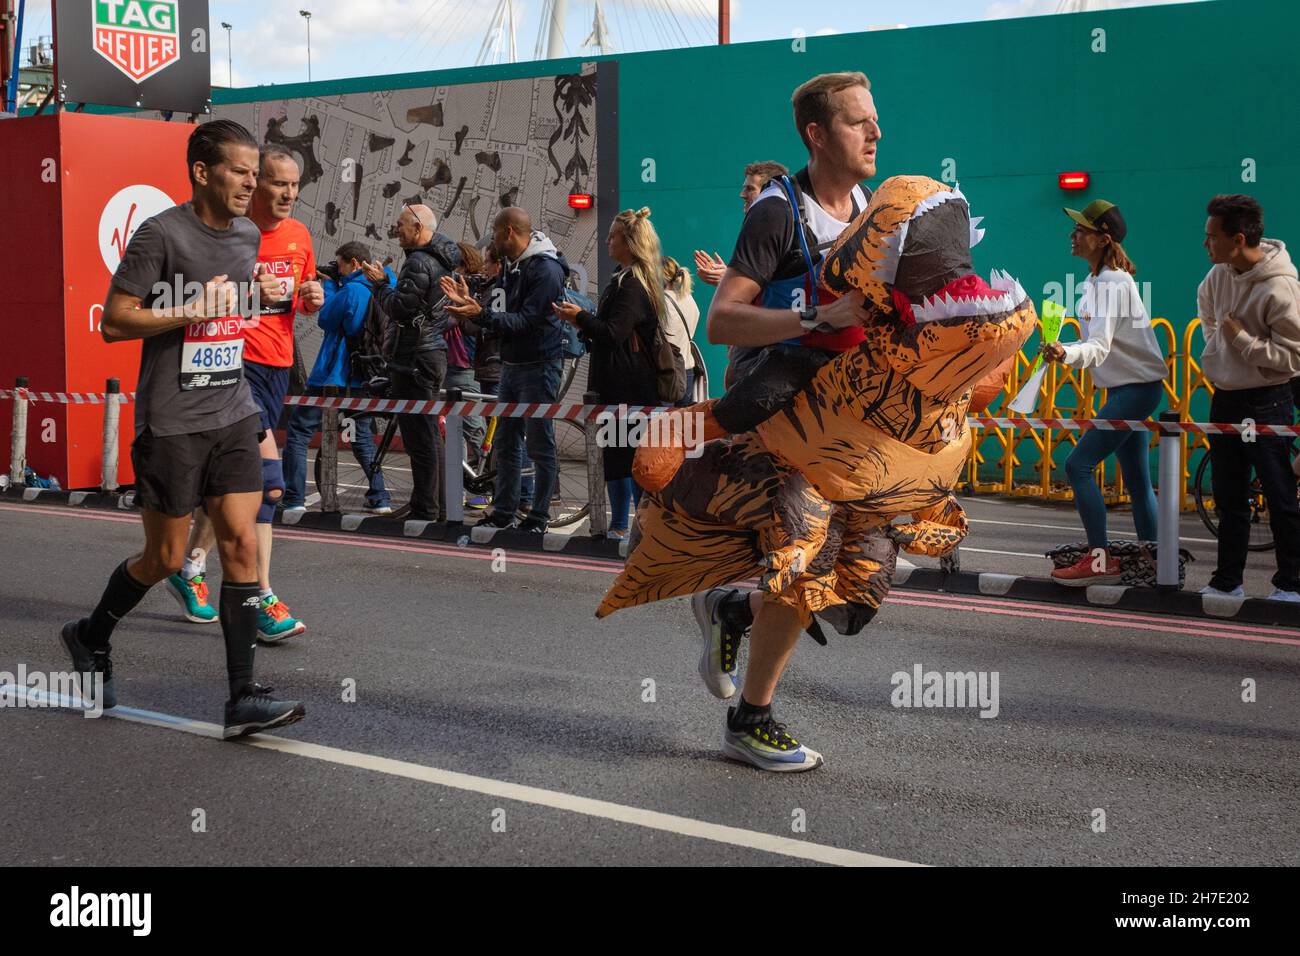 Man running dressed as a dinosaur, Virgin Money London Marathon 2021 at the 25 mile point, Victoria Embankment. Stock Photo